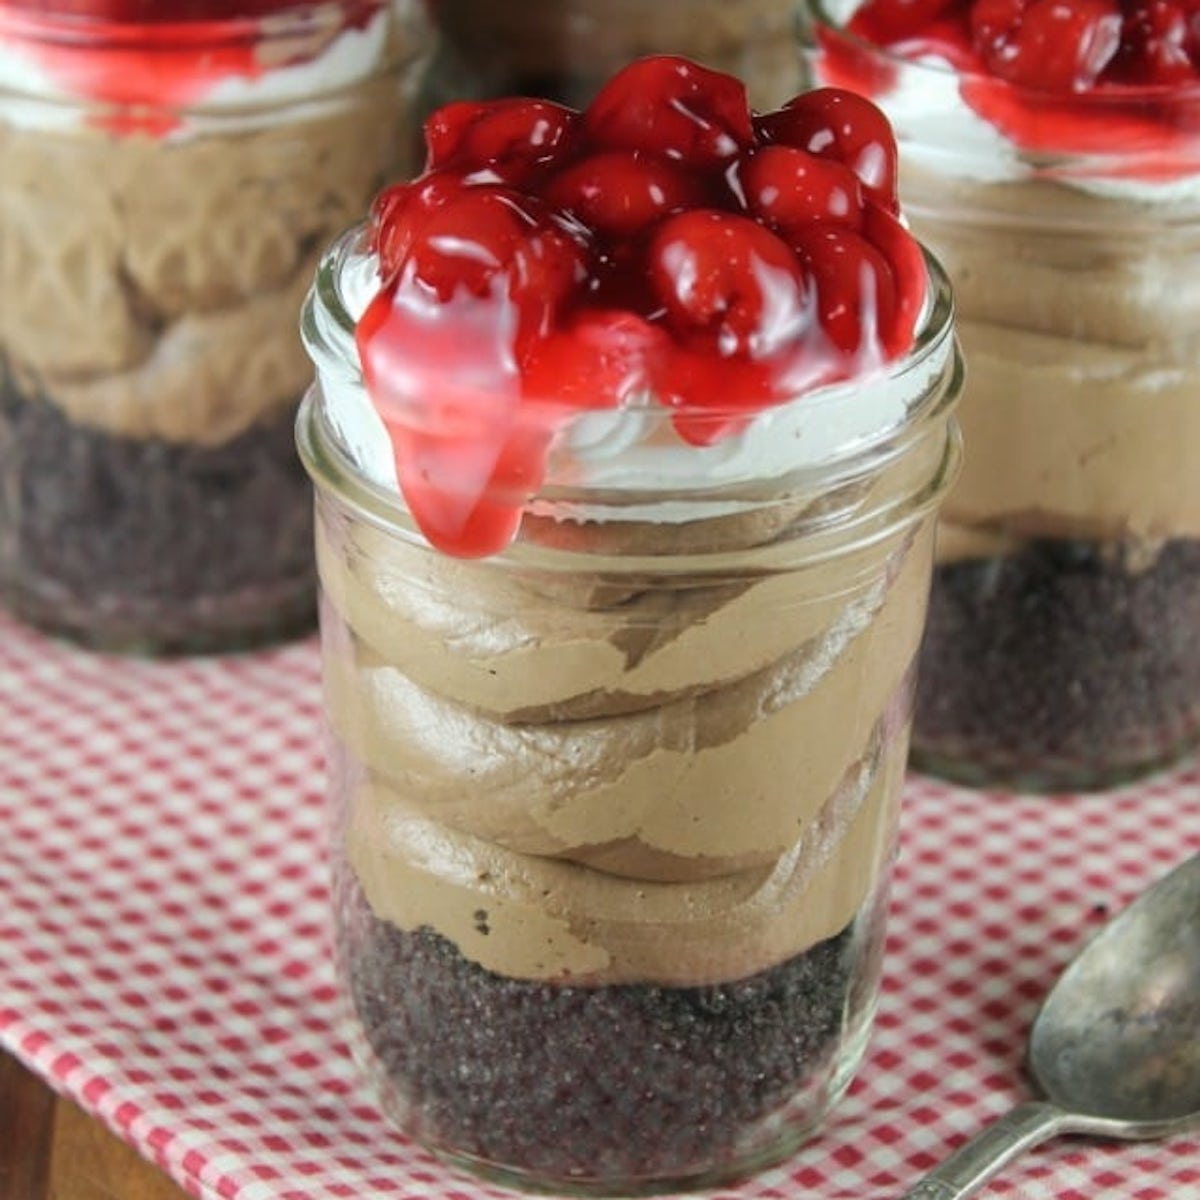 Chocolate cherry cheesecake in a jar